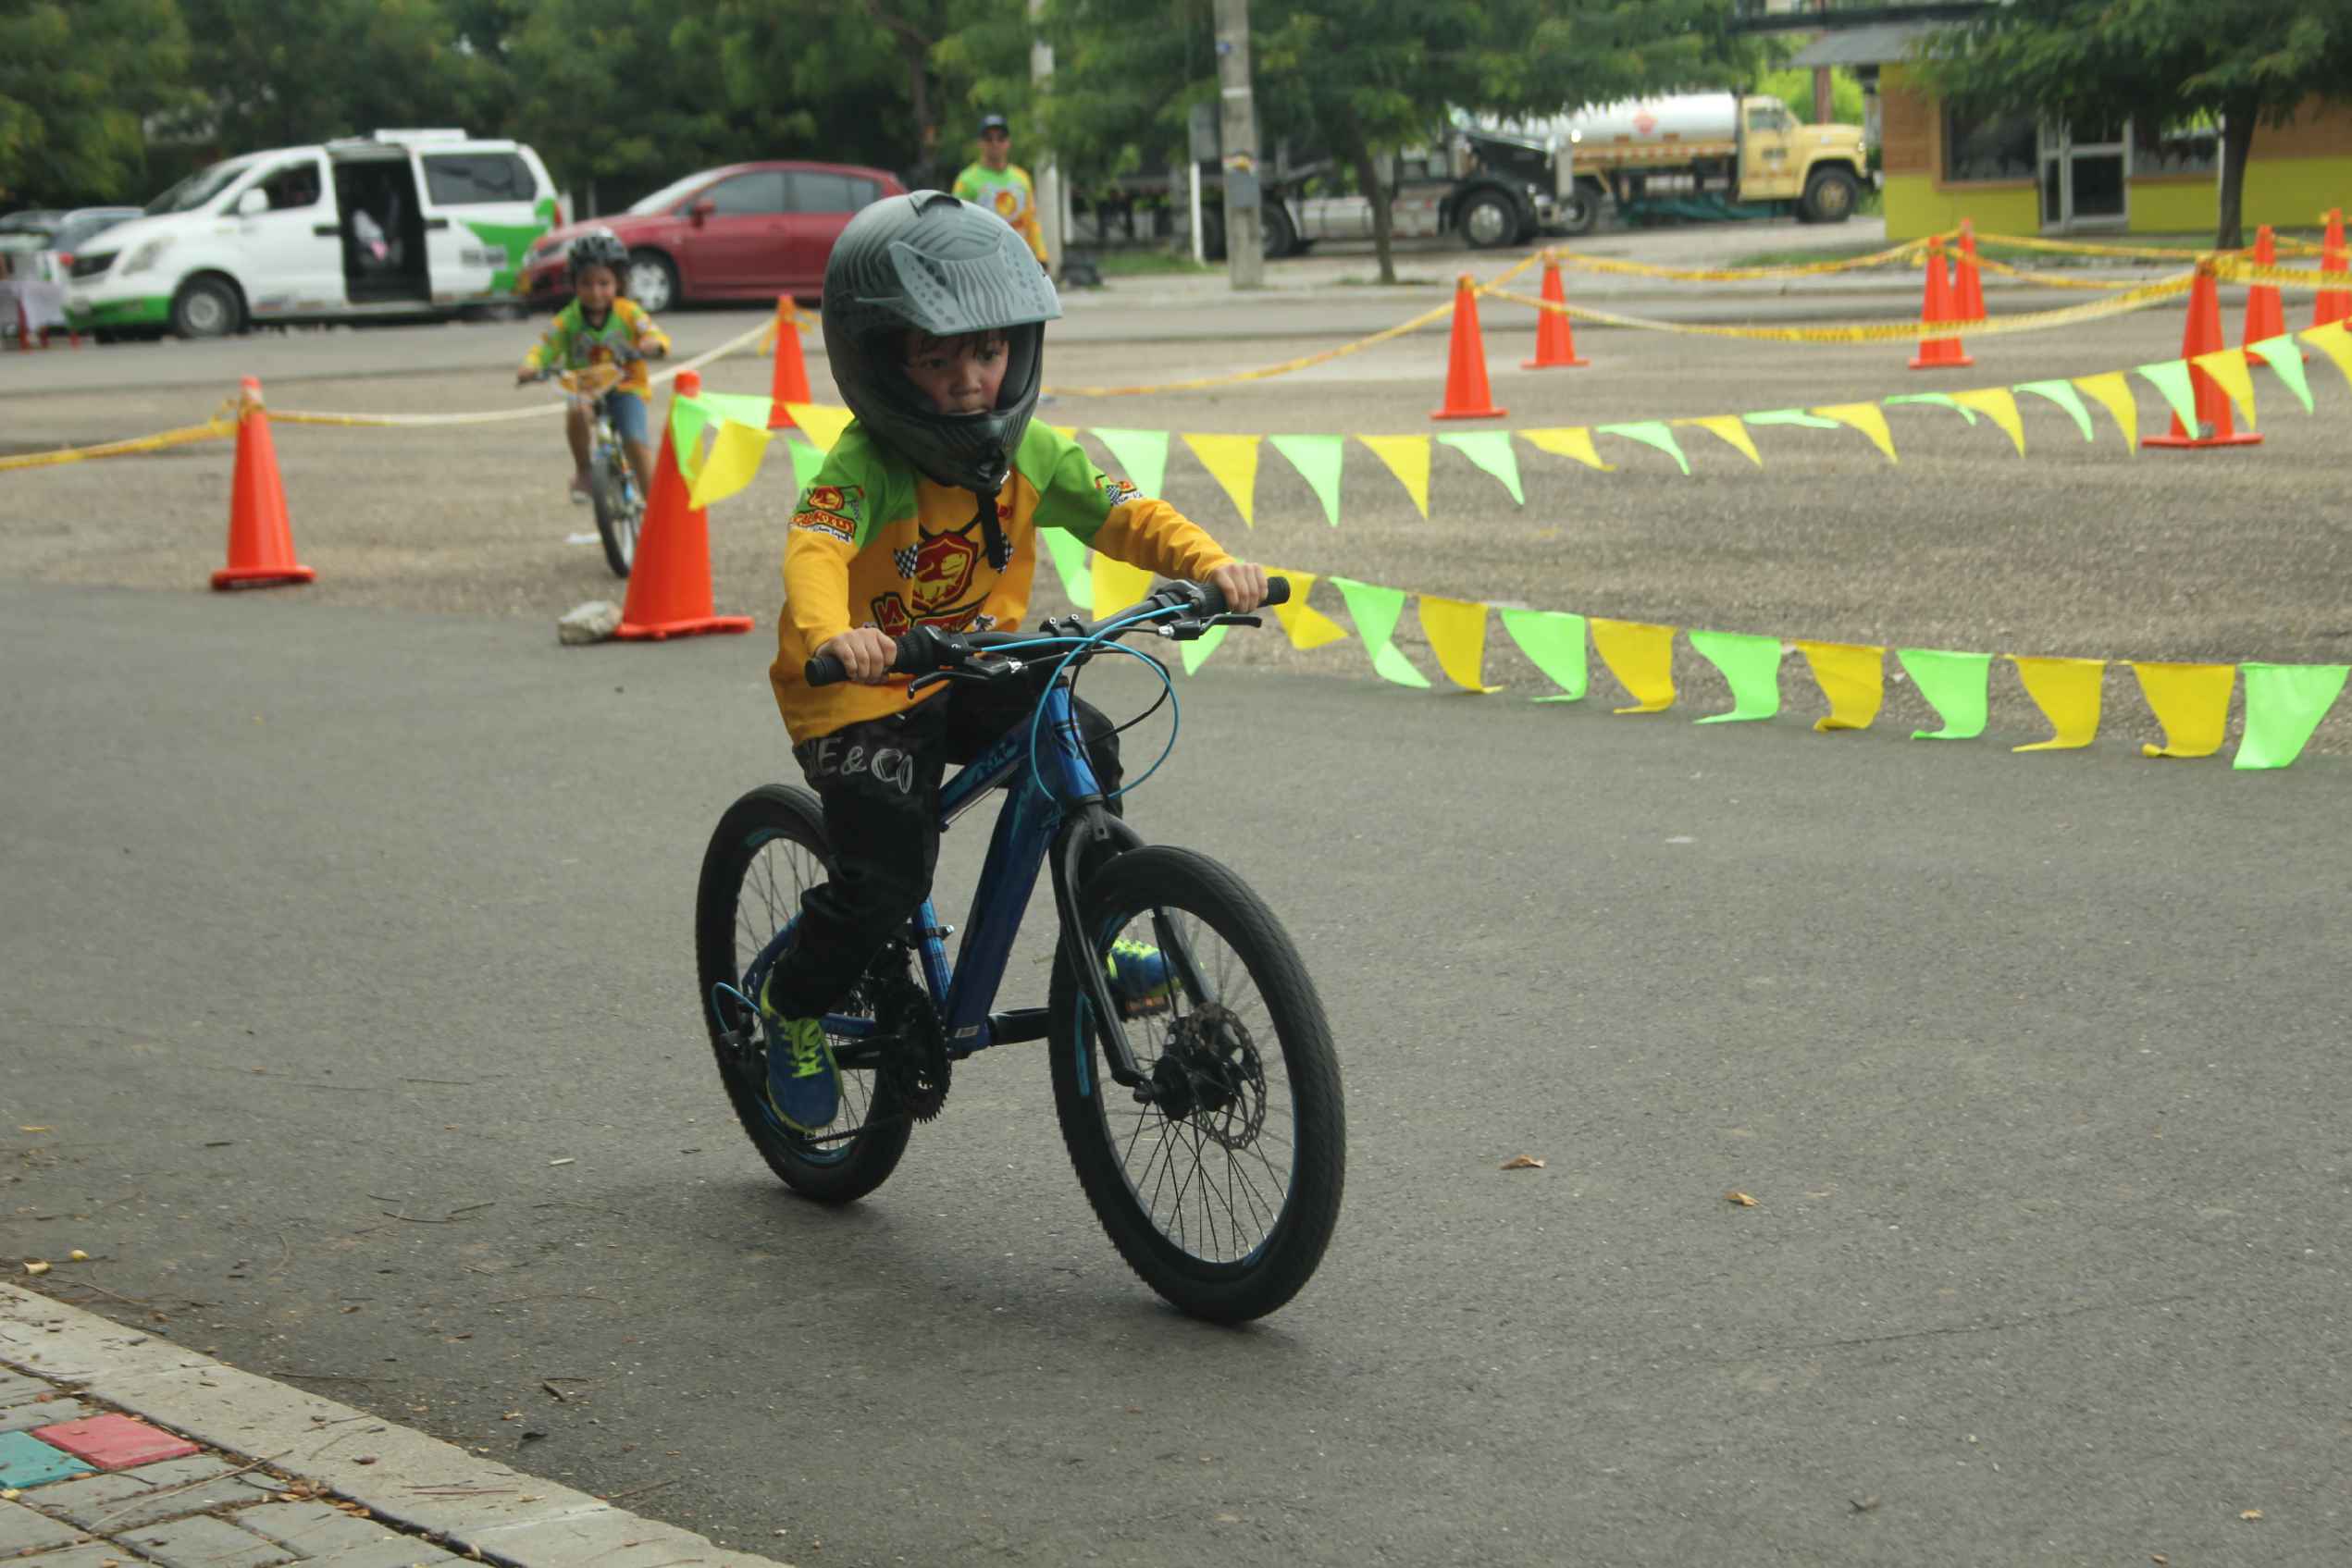 Aprender a montar en bici niños, curso. - 100% garantizado